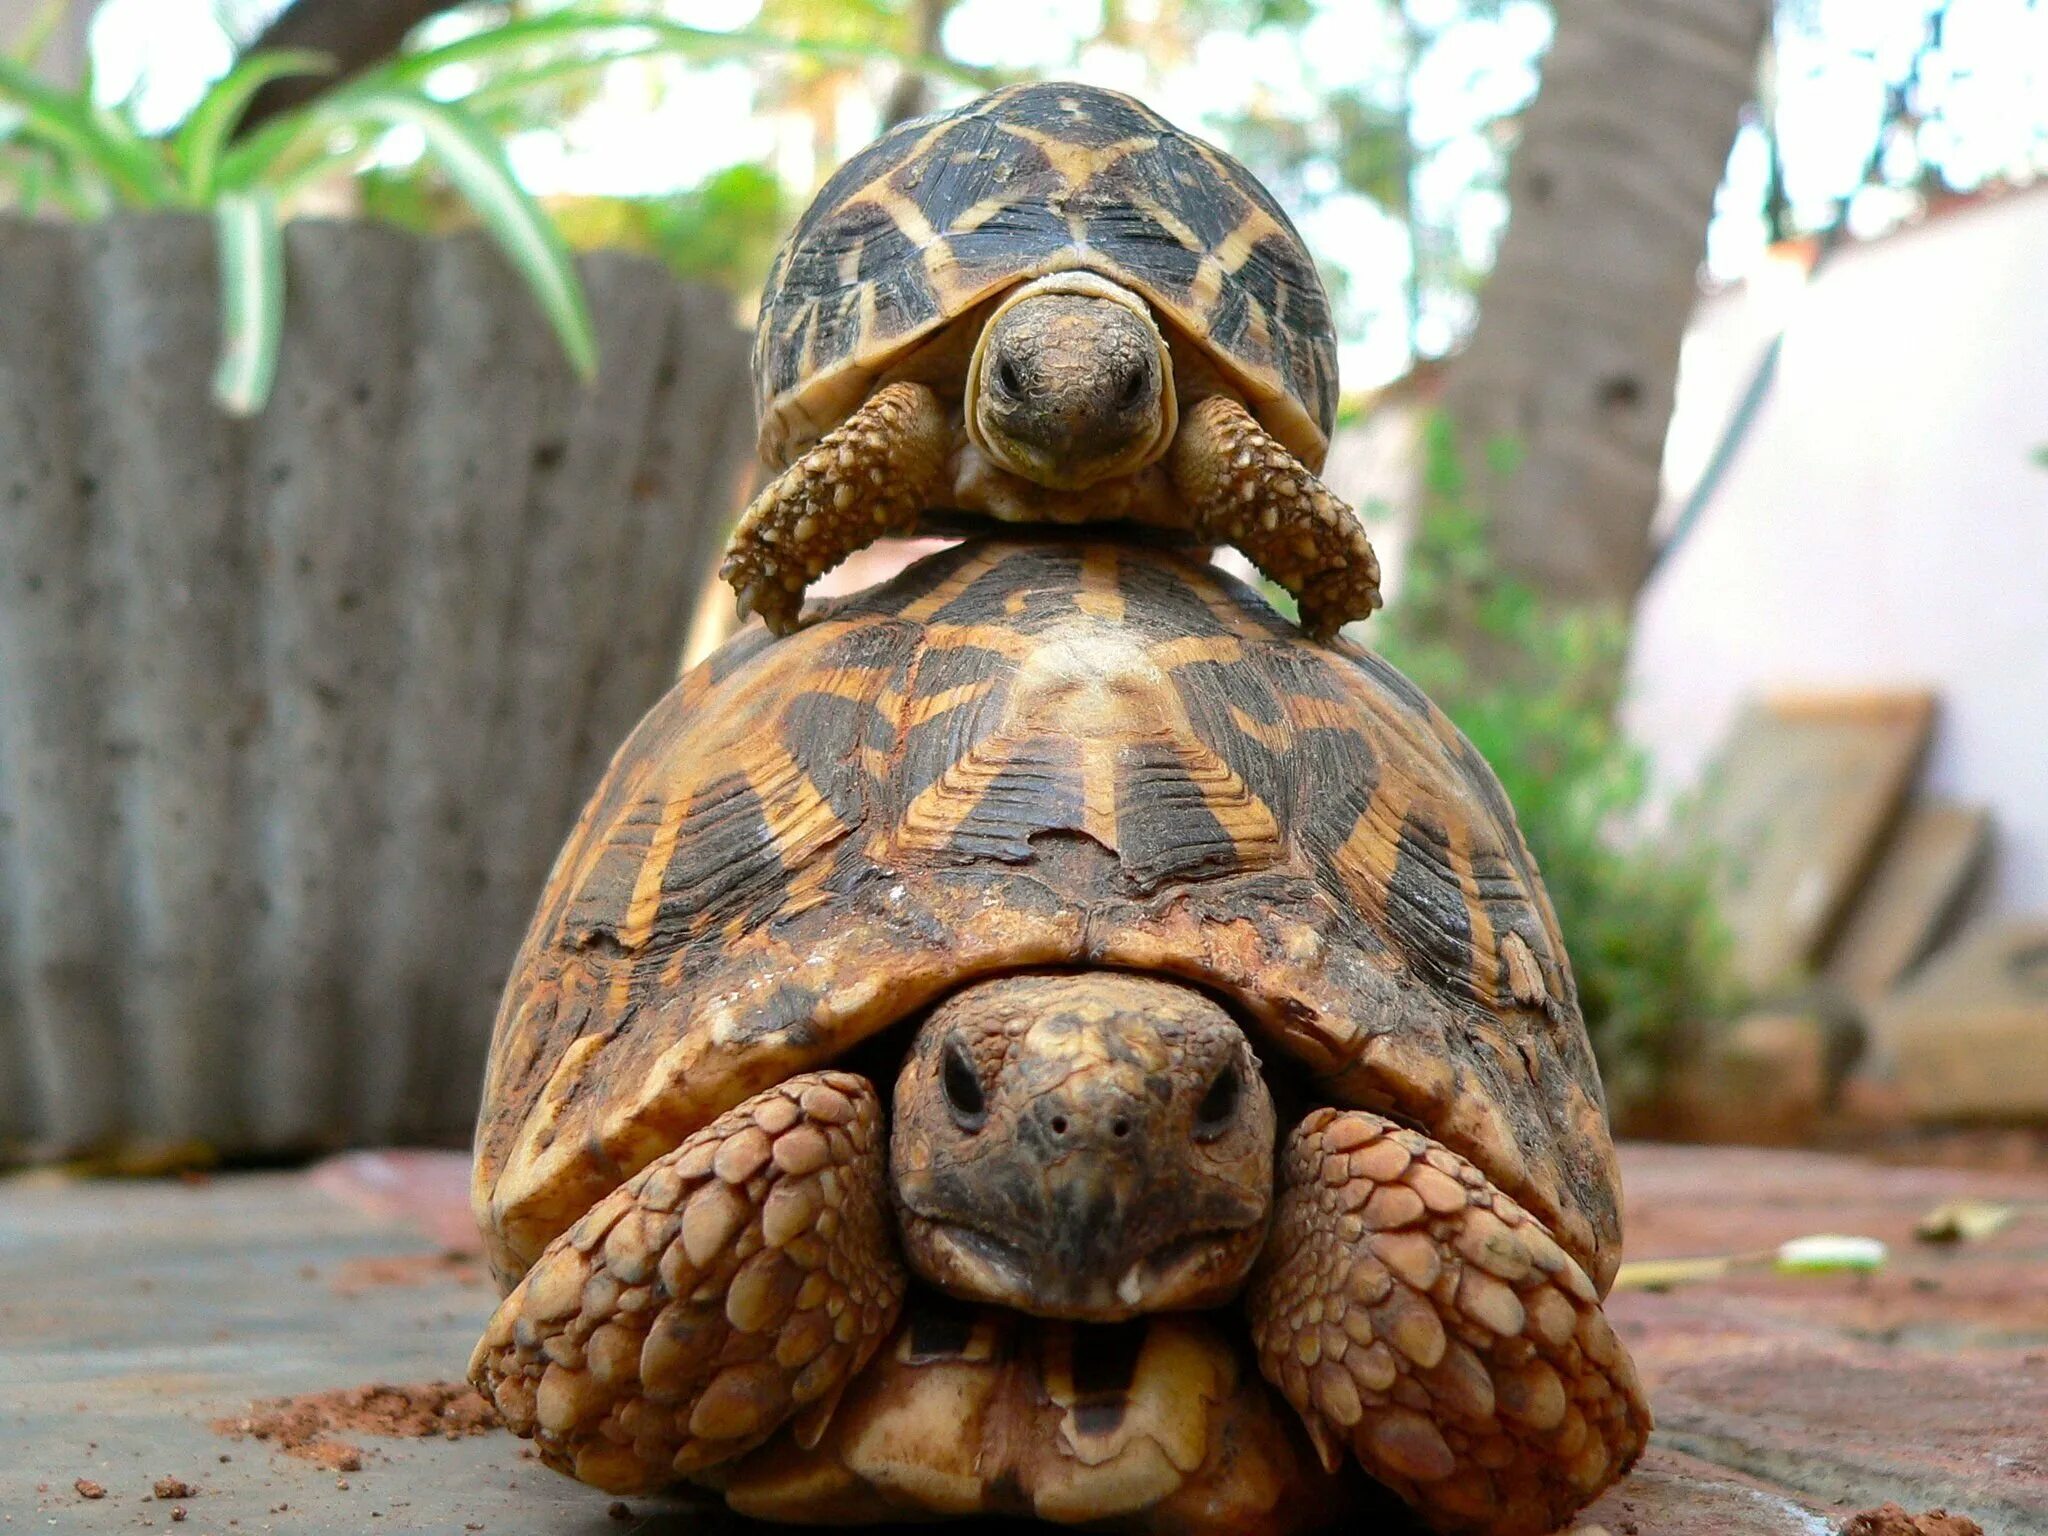 Turtle черепаха. Индийская звездчатая черепаха. Псевдогеографическая черепаха. Черепаха и Черепашонок. Индийская кровельная черепаха.